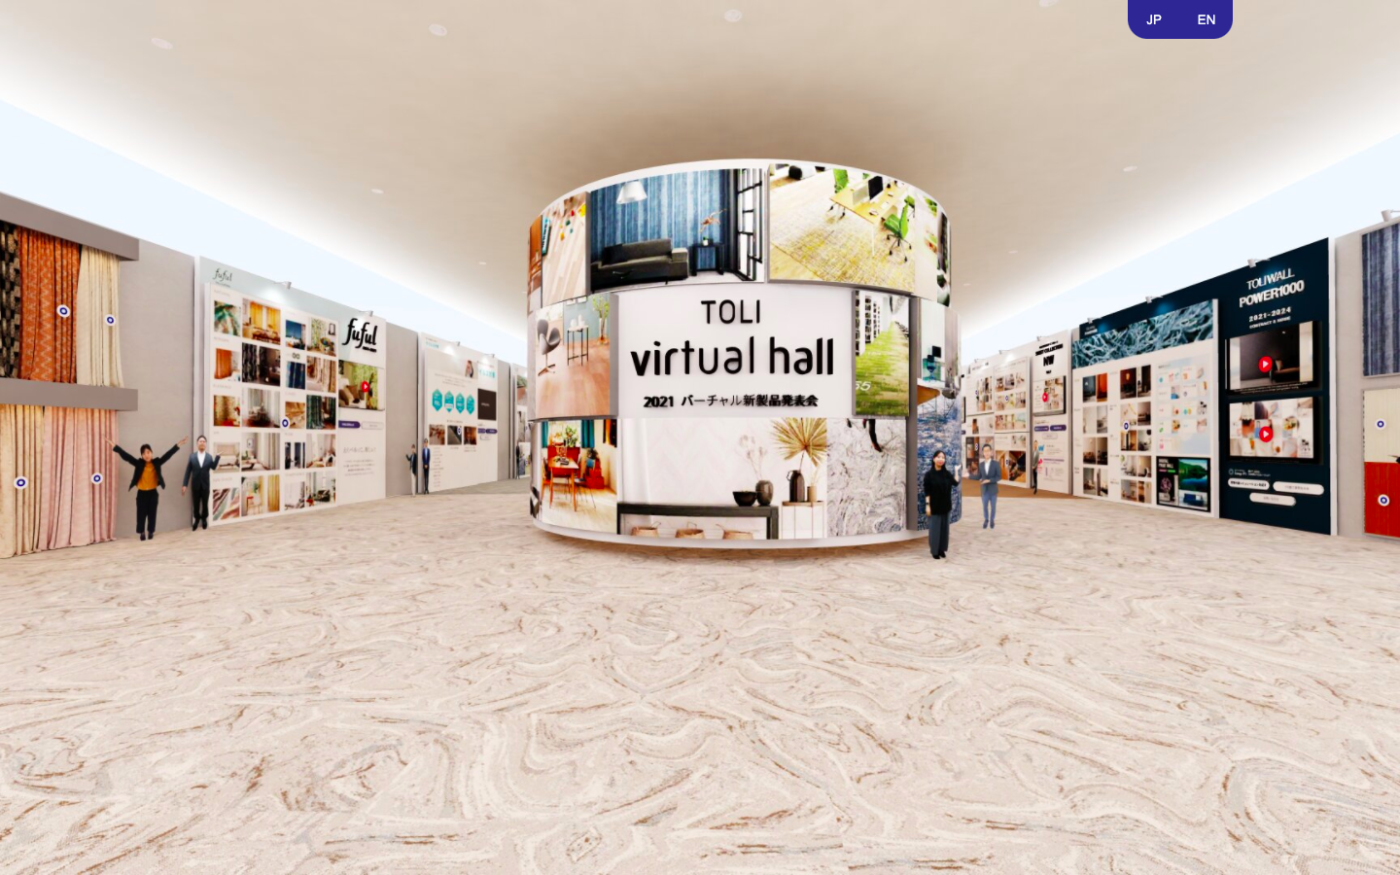 TOLI virtual hall 2021 バーチャル新製品発表会 画面